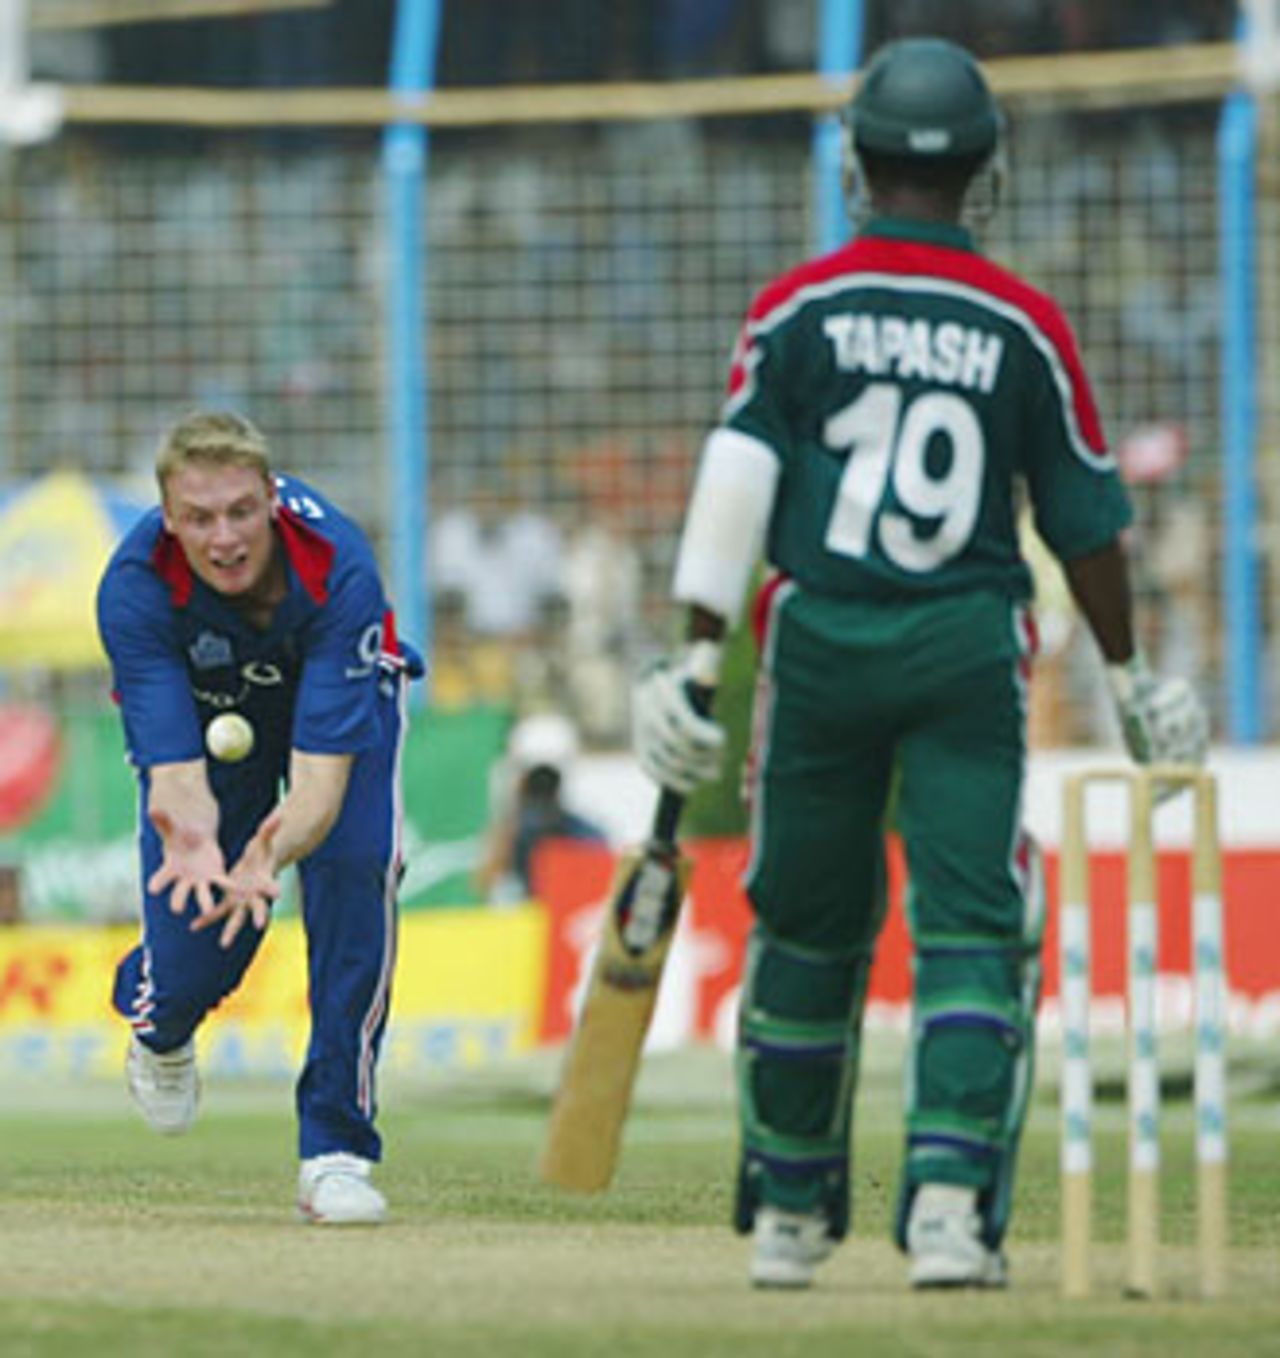 Andrew Flintoff catches Tapash Baisya, finishing with 4 for 14, Bangladesh v England, 1st ODI, Chittagong, November 7, 2003